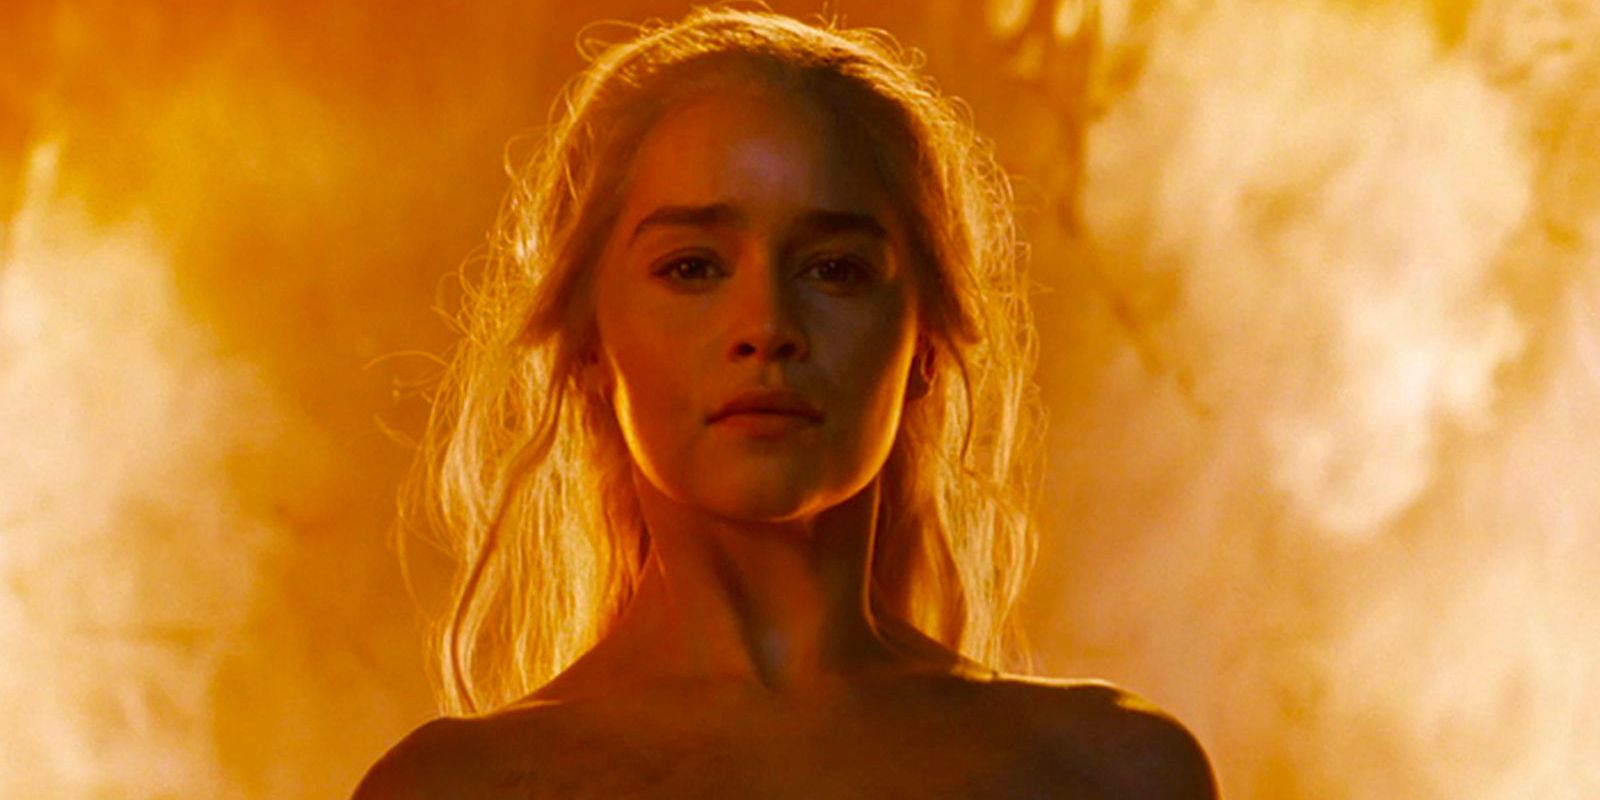 Daenerys Targaryen (Emilia Clarke) emerges from a blazing fire in a temple in Vaes Dothrak completely unharmed.